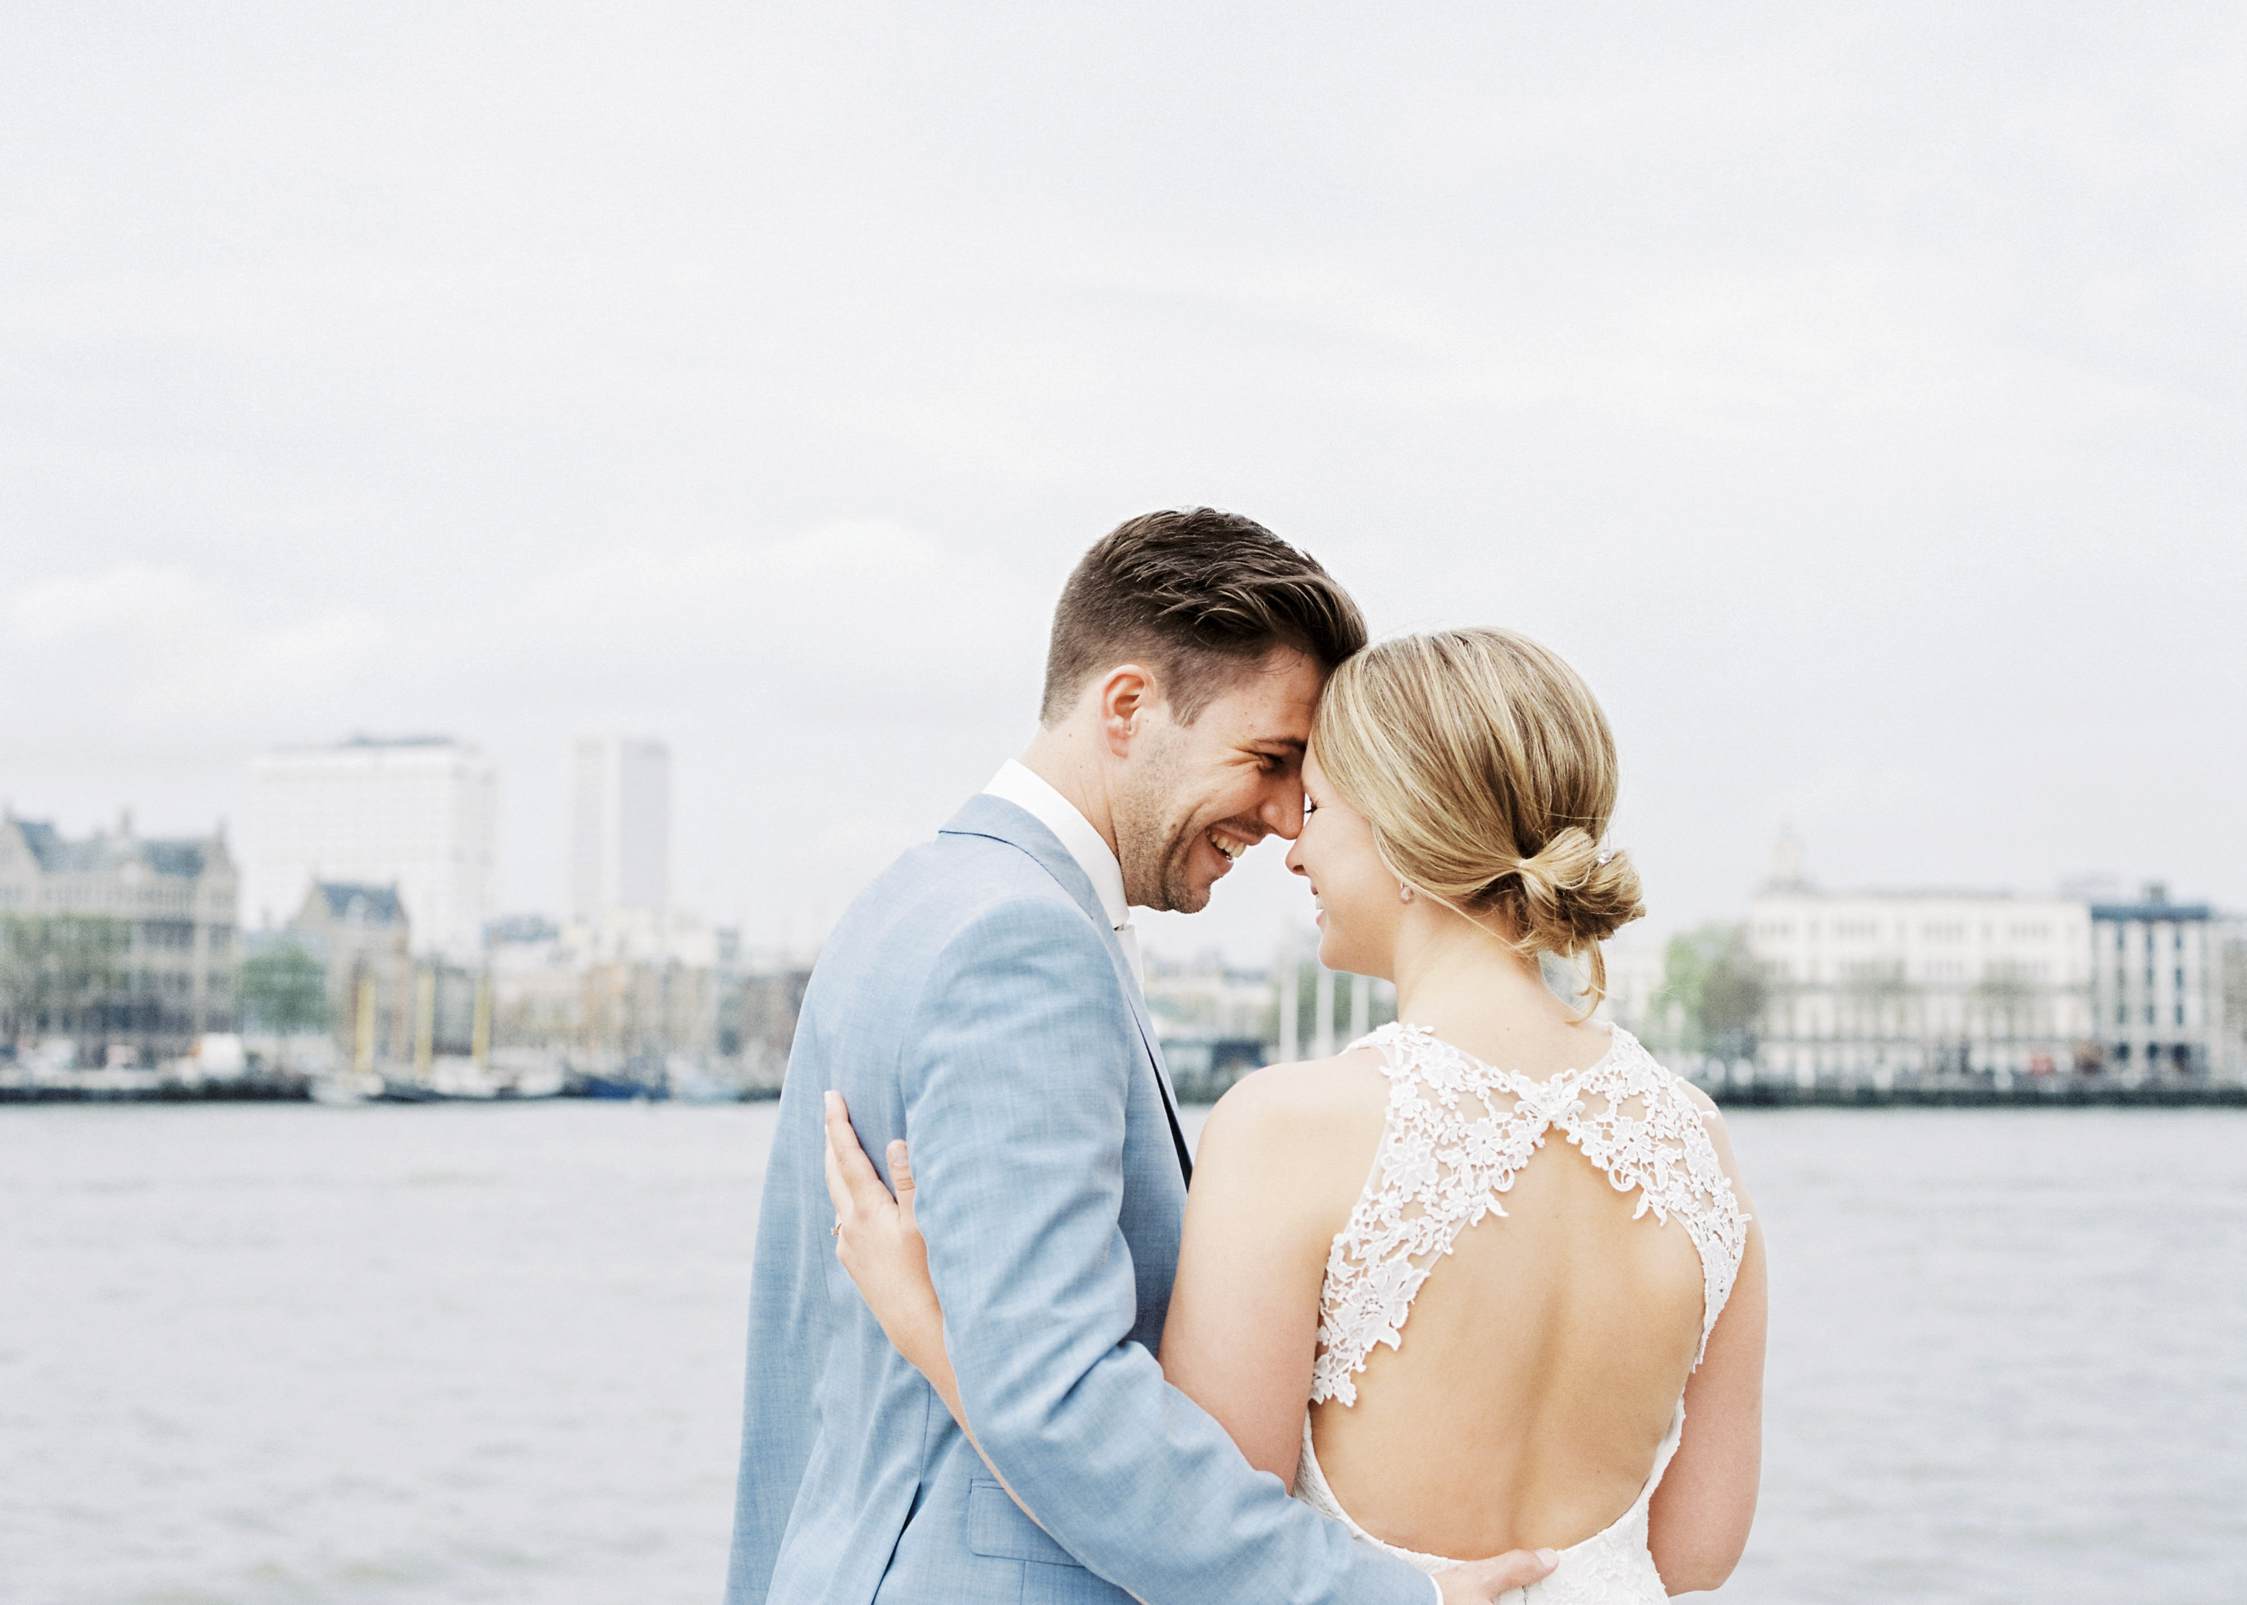 Wedding photographer Hotel New York Rotterdam - Love shoot